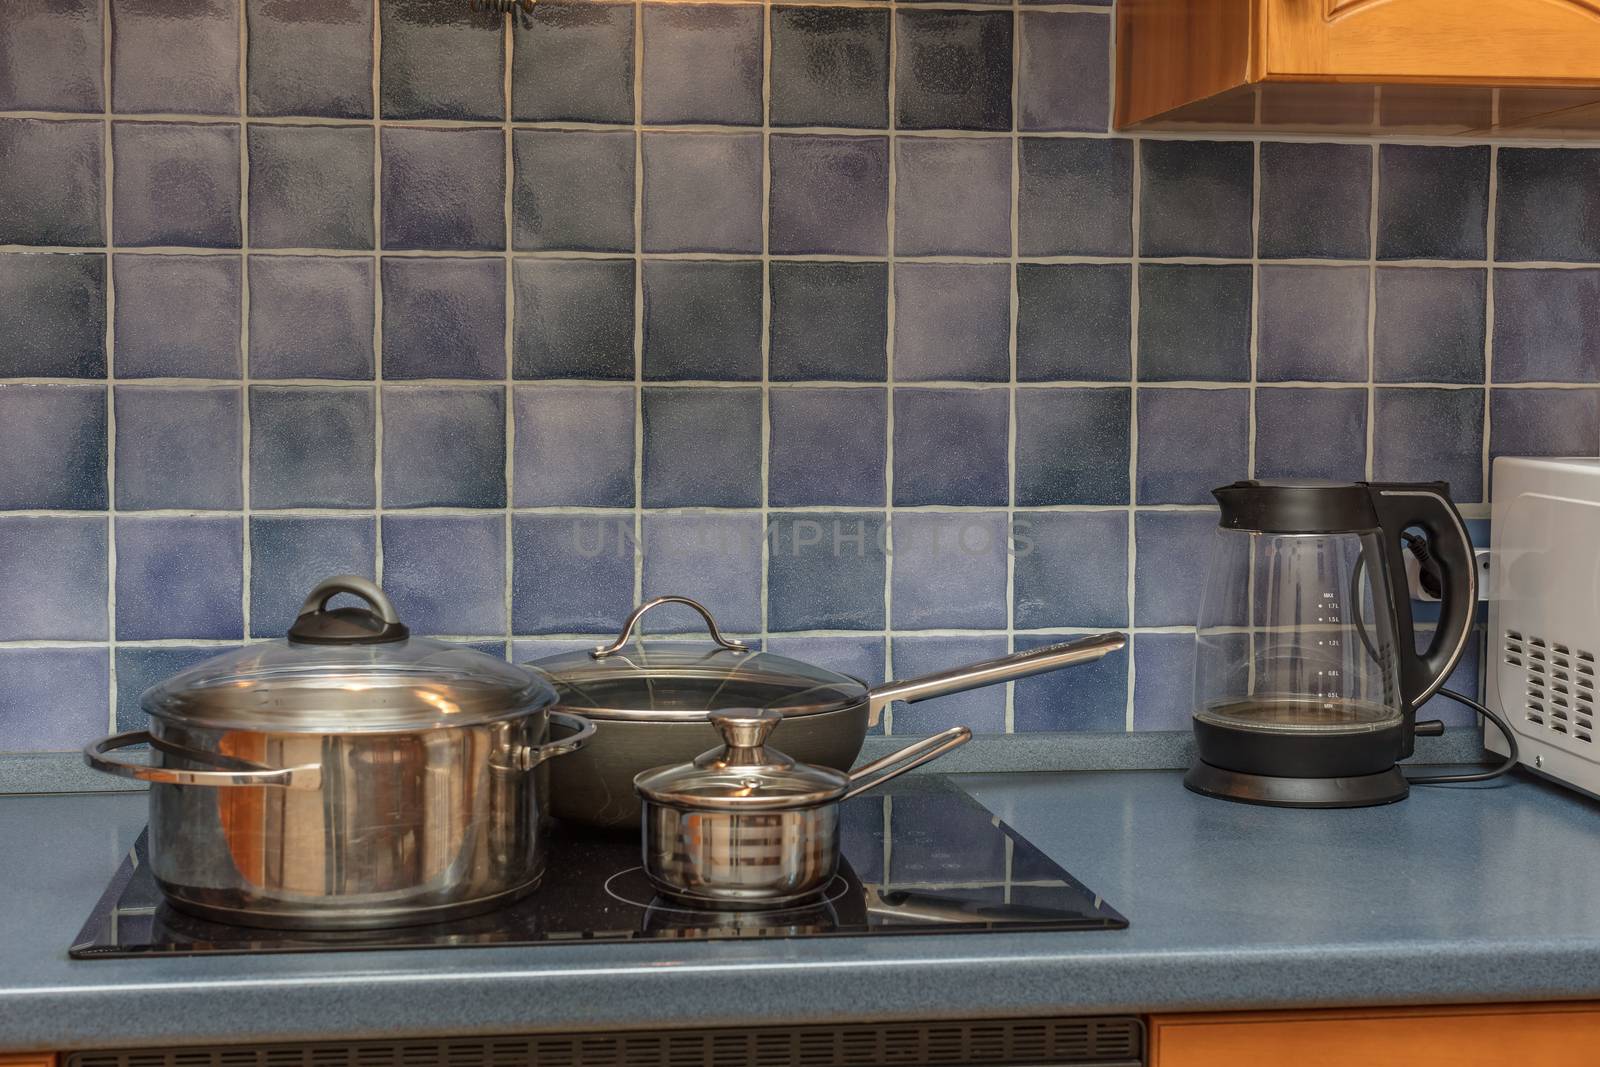 saucepan on stove by olga_sweet